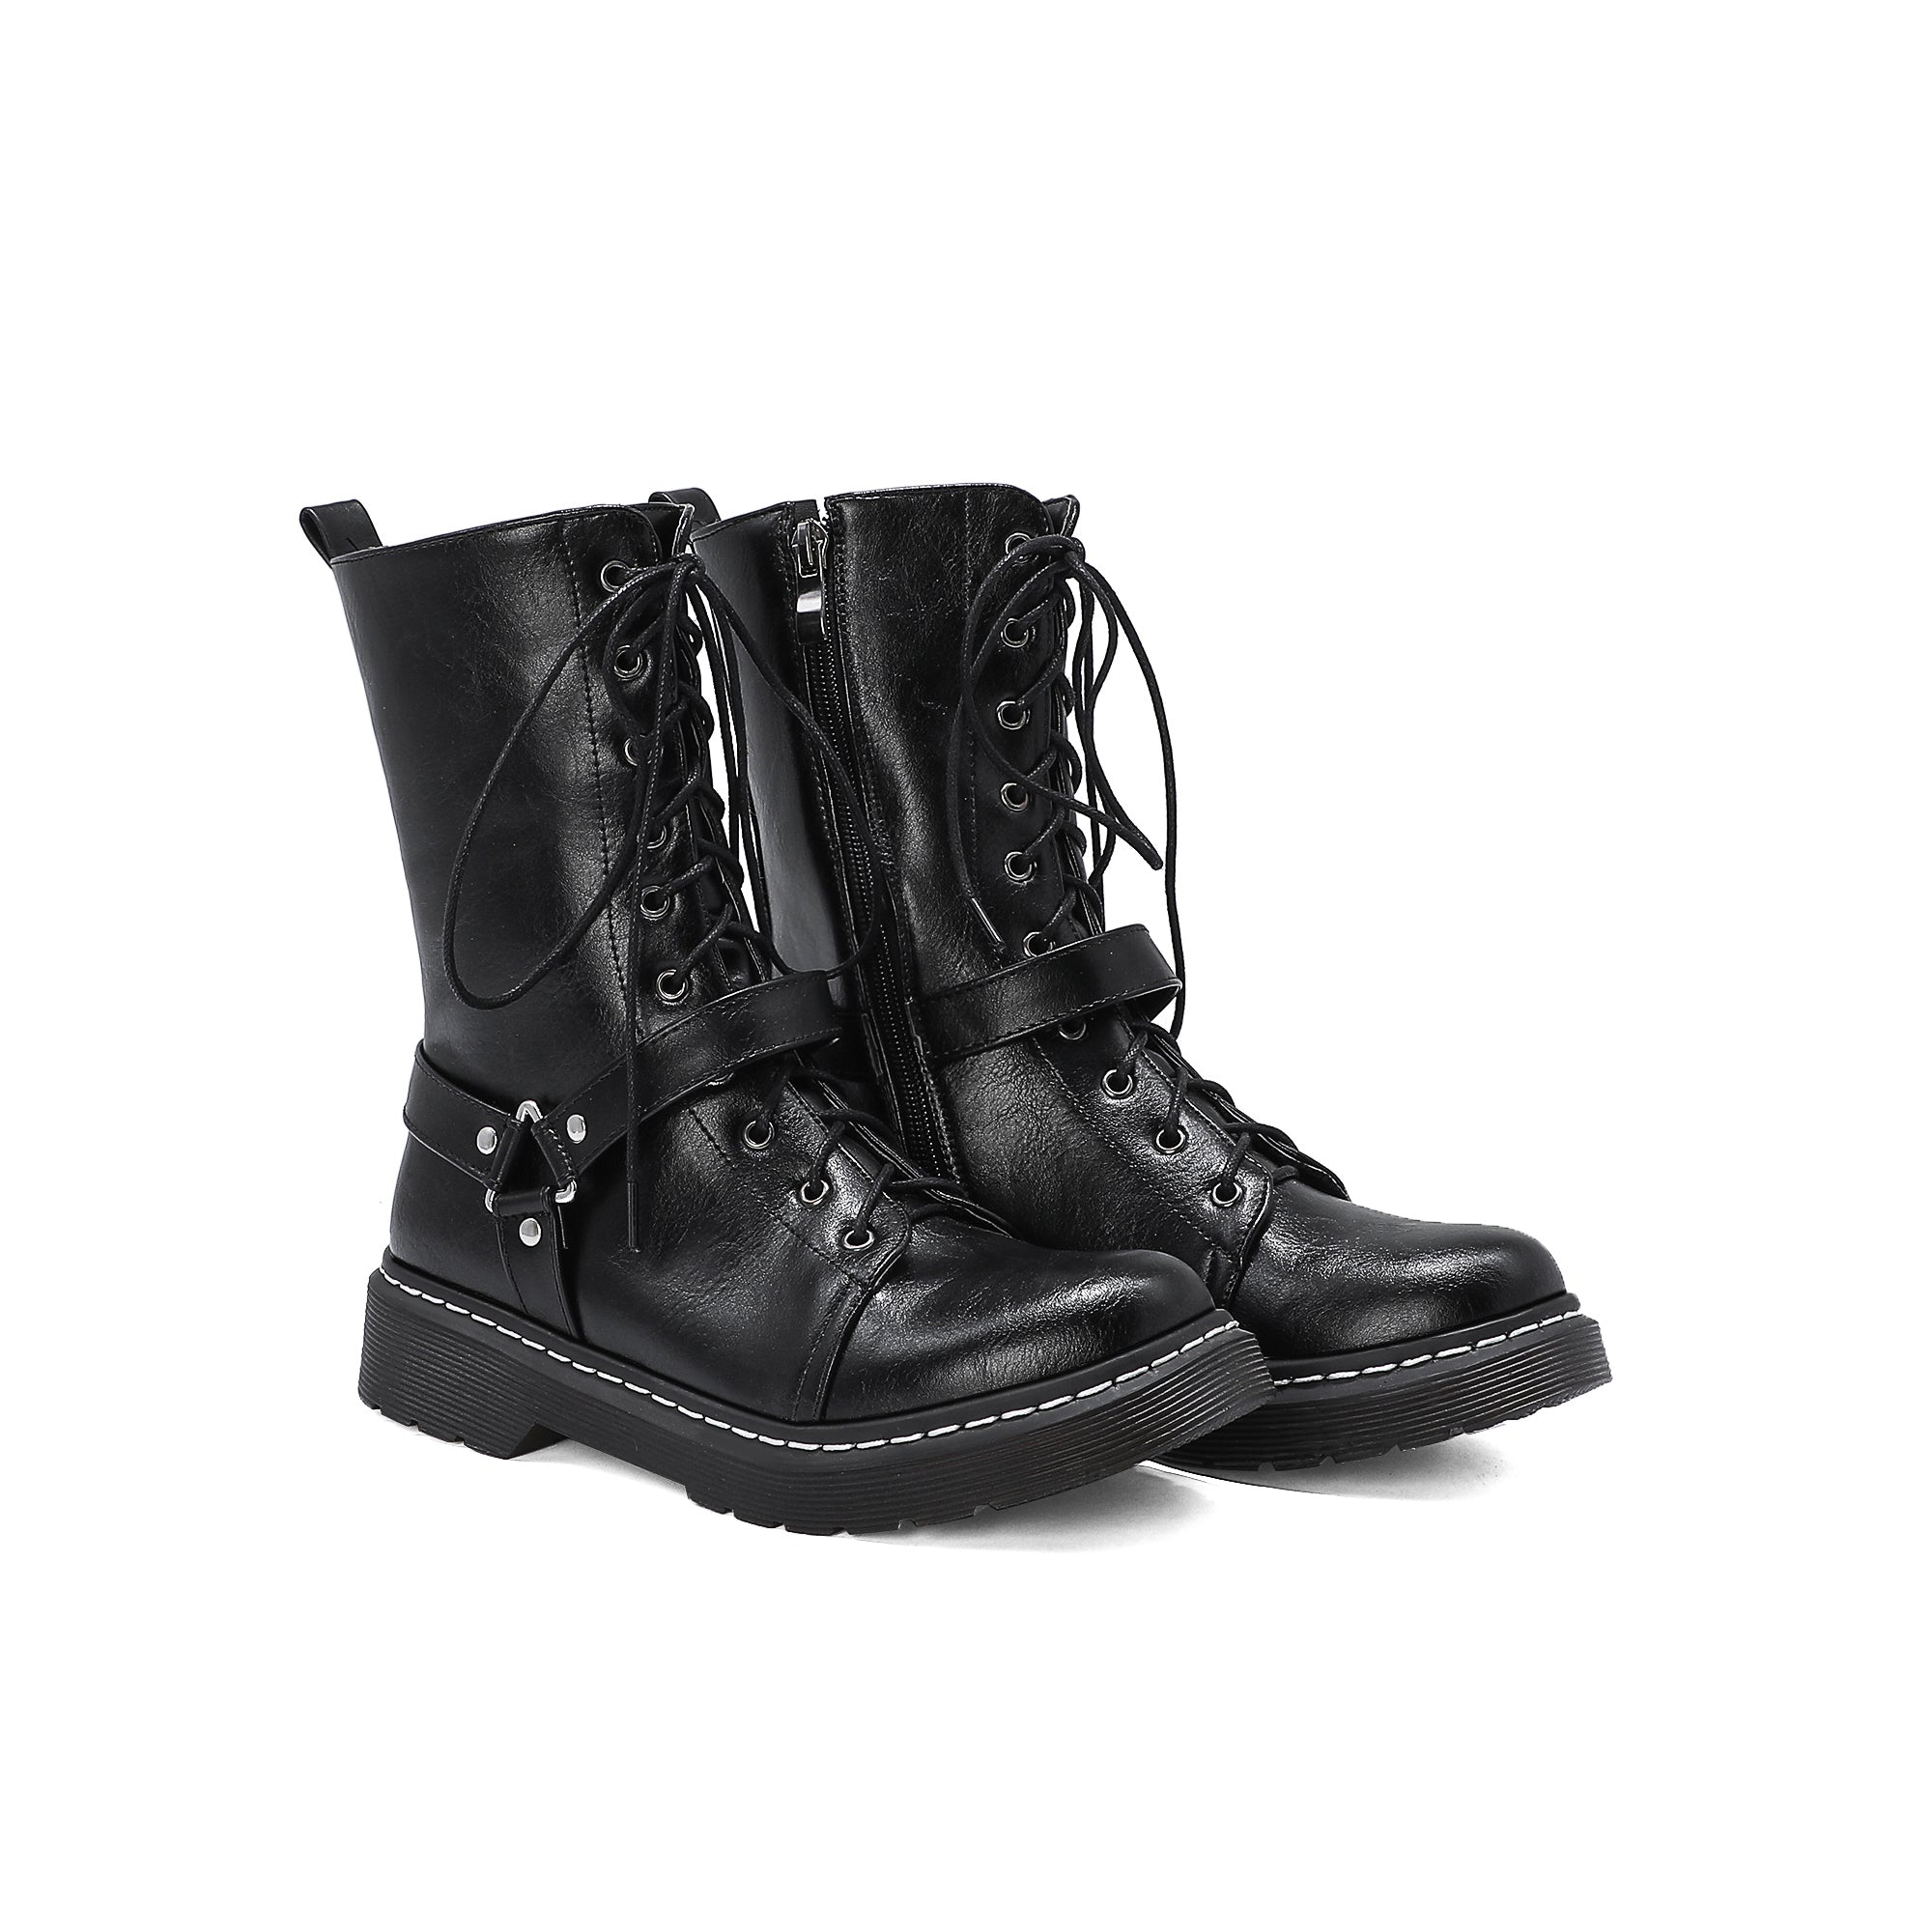 Bigsizeheels Vintage black decorated Martin boots - Black freeshipping - bigsizeheel®-size5-size15 -All Plus Sizes Available!